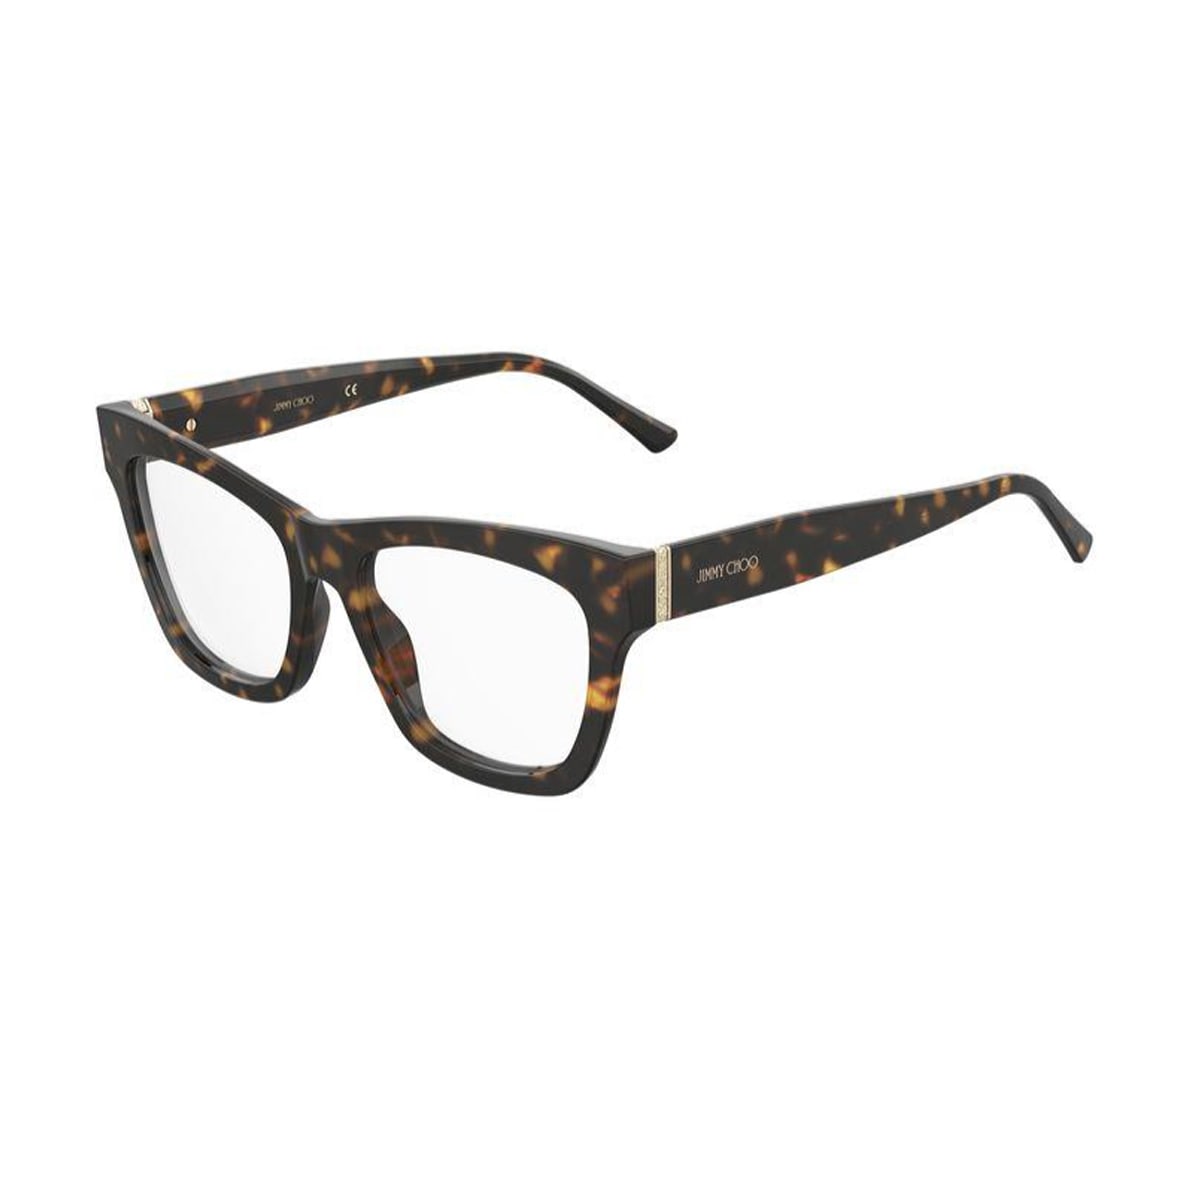 Jimmy Choo Eyewear Jc351 086/18 Glasses